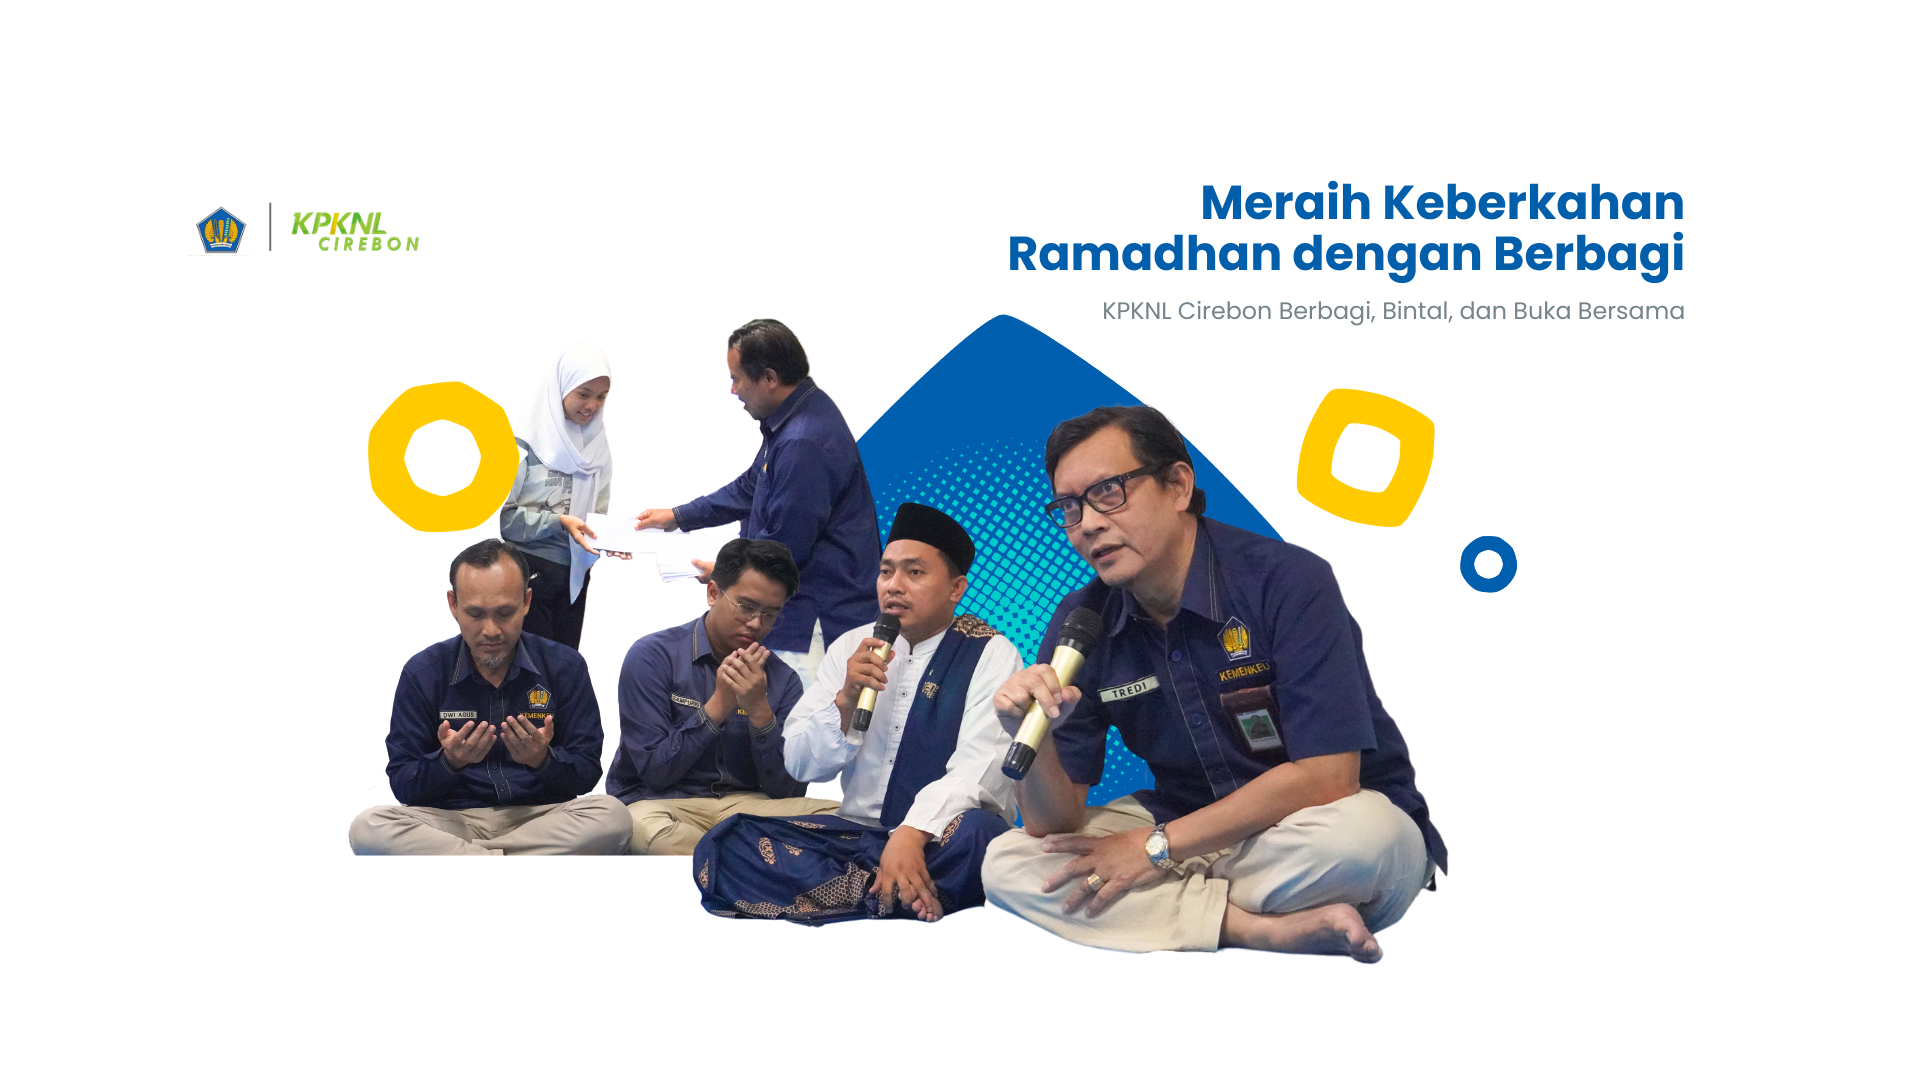 Meraih Keberkahan Ramadhan dengan Berbagi, KPKNL Cirebon Berbagi, Bintal dan Buka Bersama